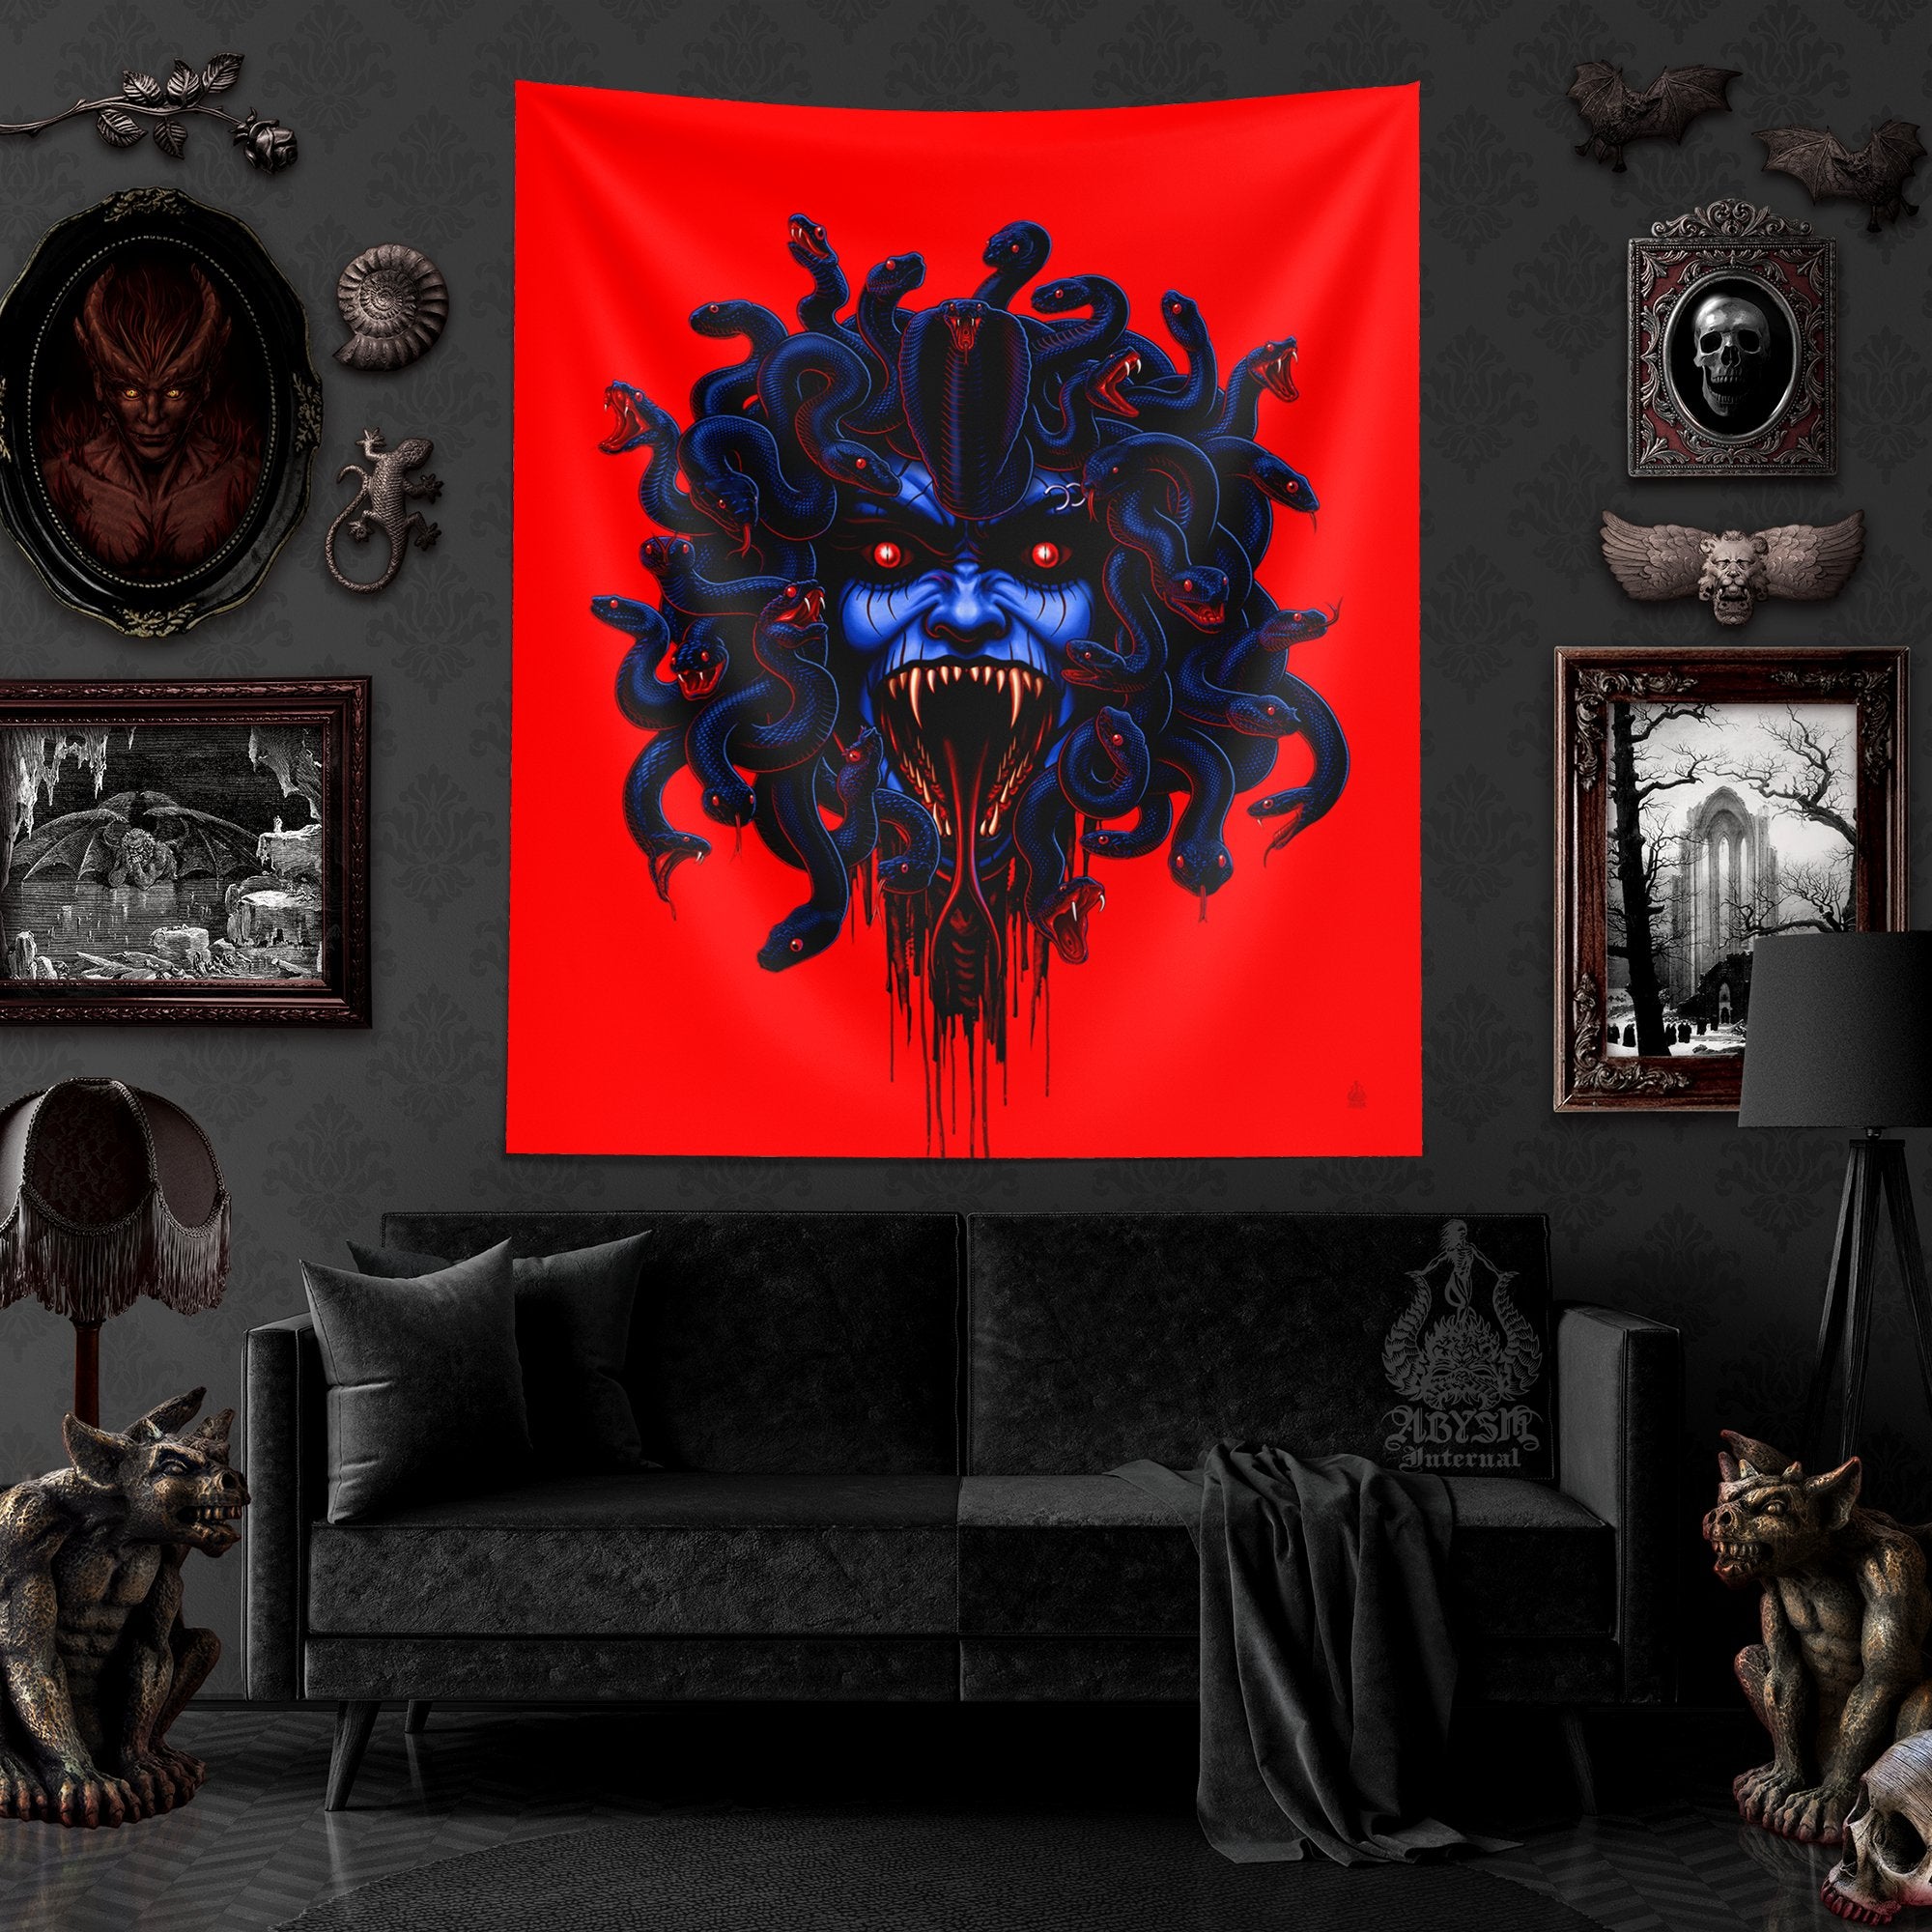 Horror Tapestry, Skull Red Wall Hanging, Halloween Home Decor, Vertical Art Print - Neon Medusa & Snakes, 3 Faces - Abysm Internal